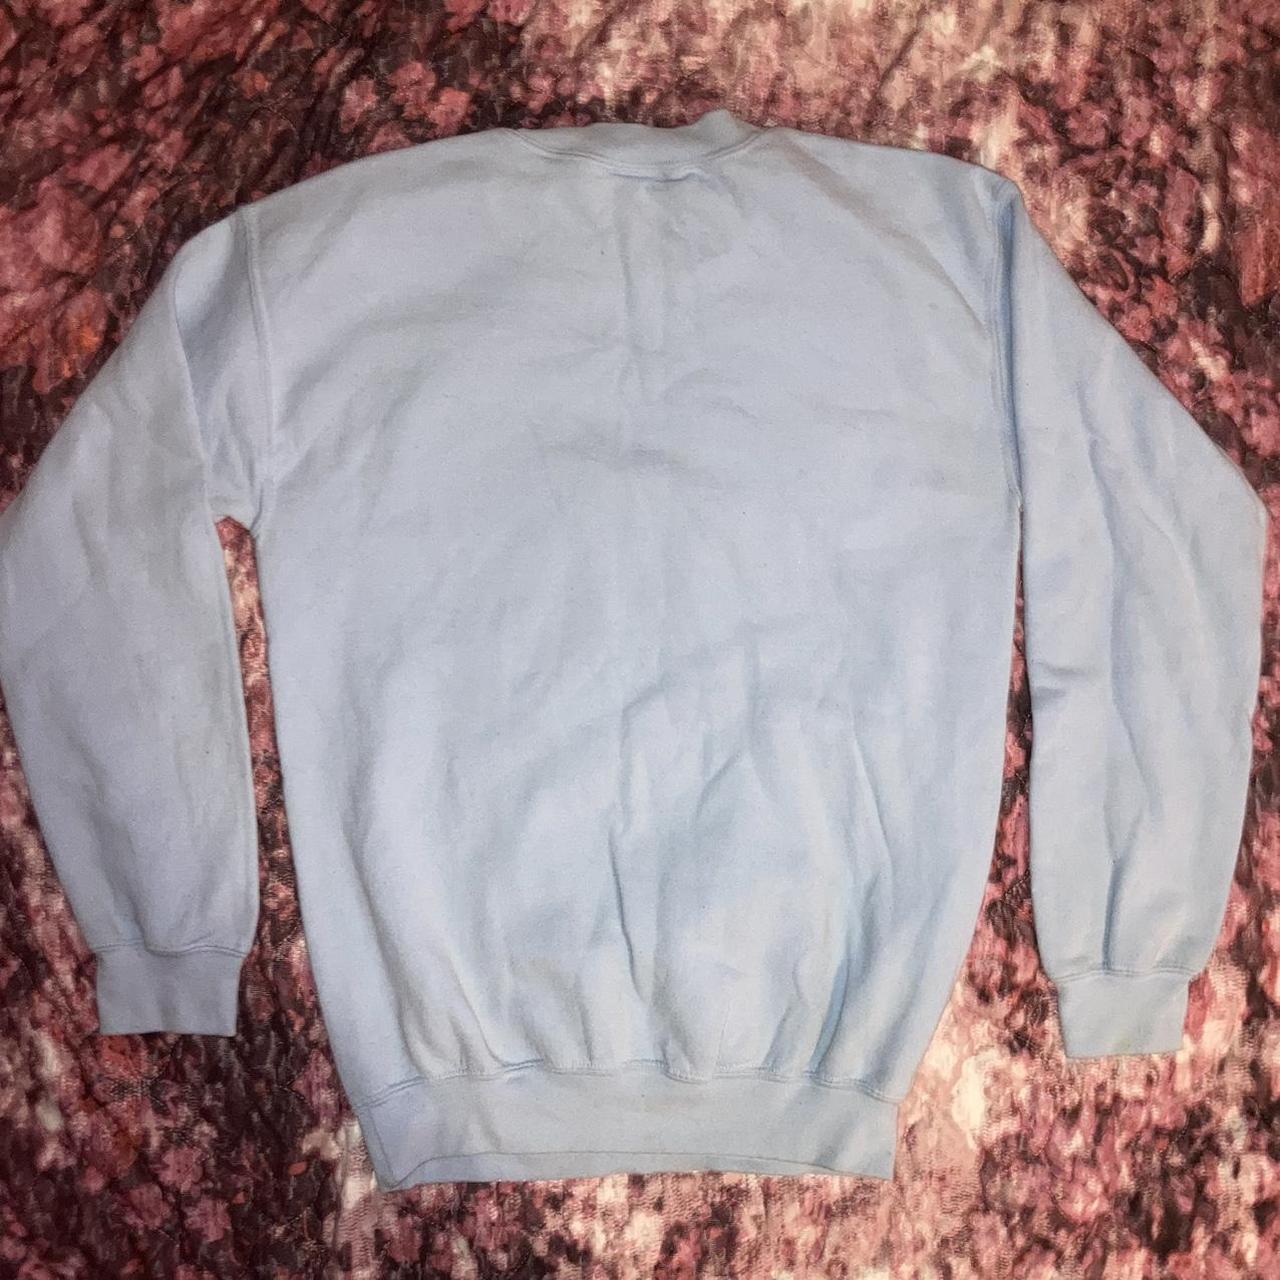 OMOCAT Men's White and Blue Sweatshirt (4)